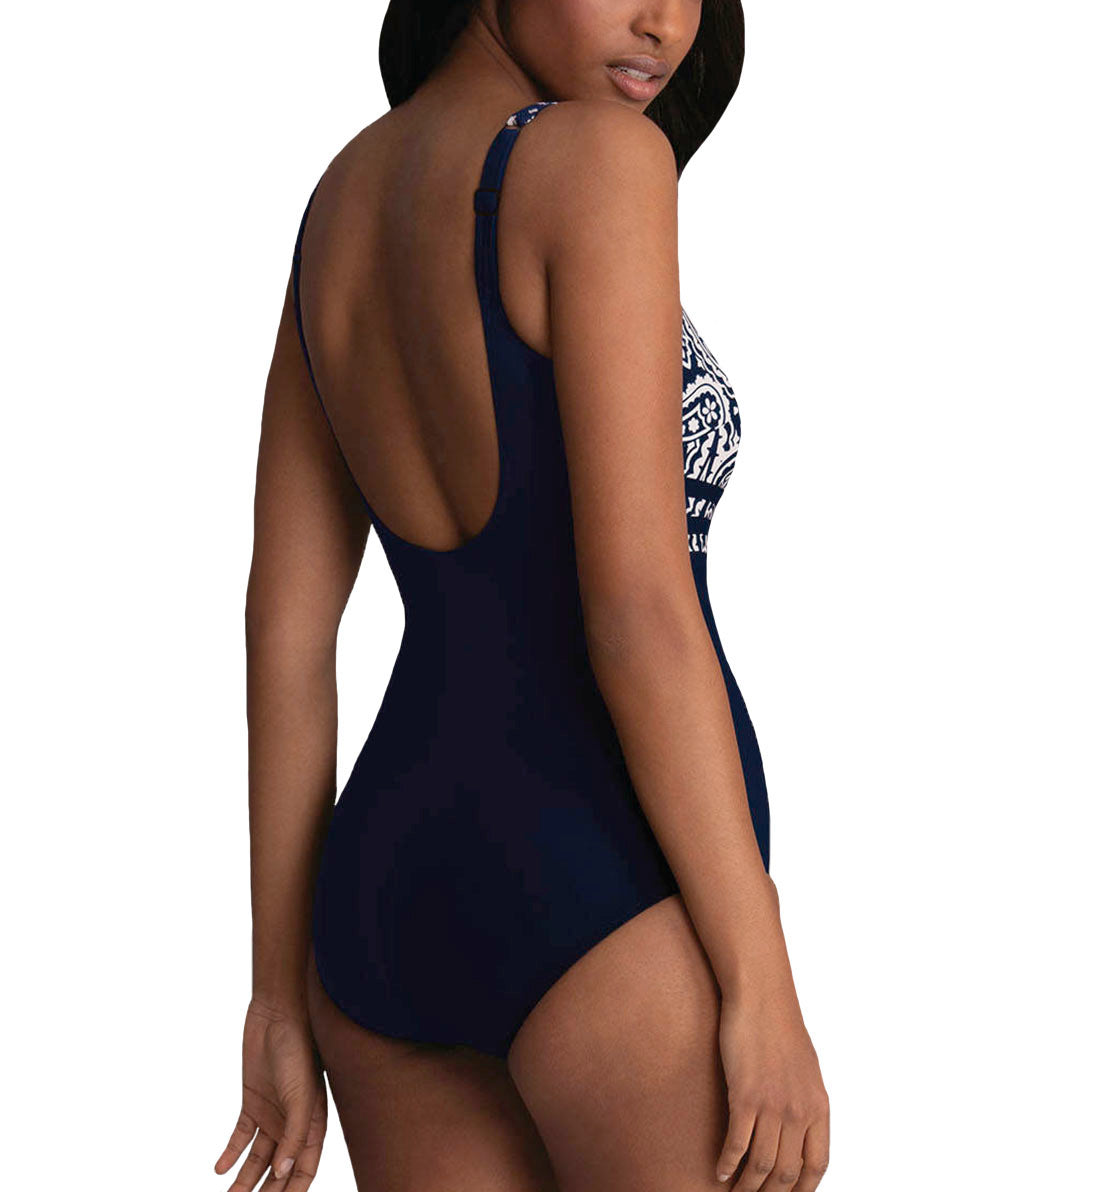 Anita Paisley Passion Luella Slimming One Piece Swimsuit (7370),36D,Dark Blue - Dark Blue,36D